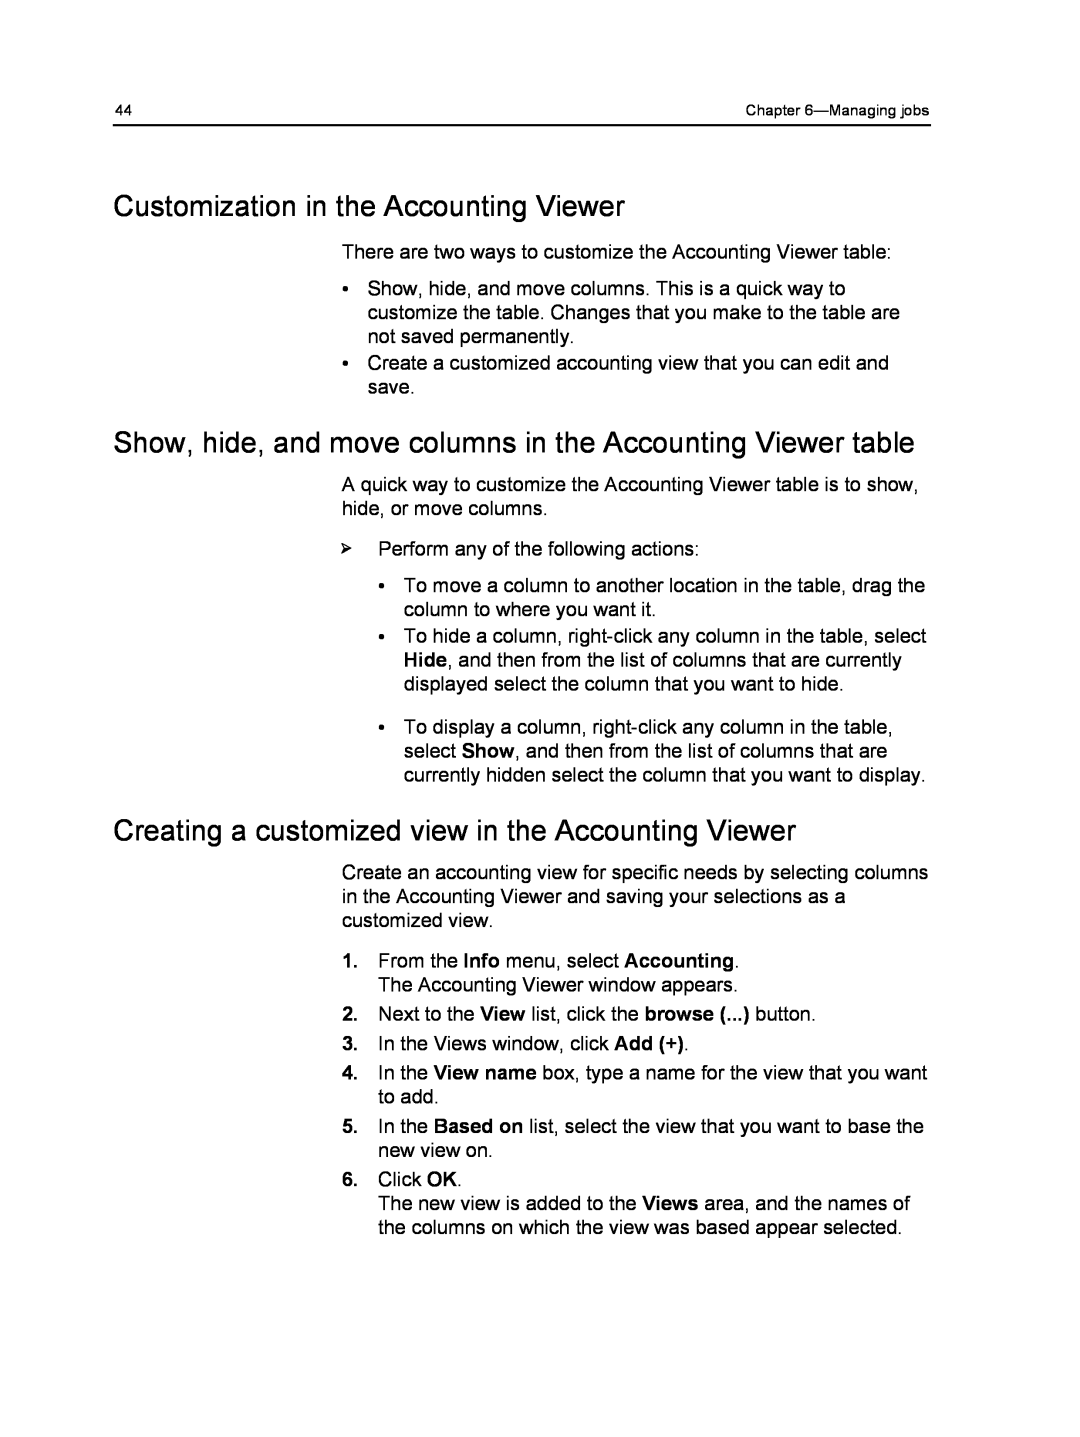 Xerox 560, 550 manual Customization in the Accounting Viewer 